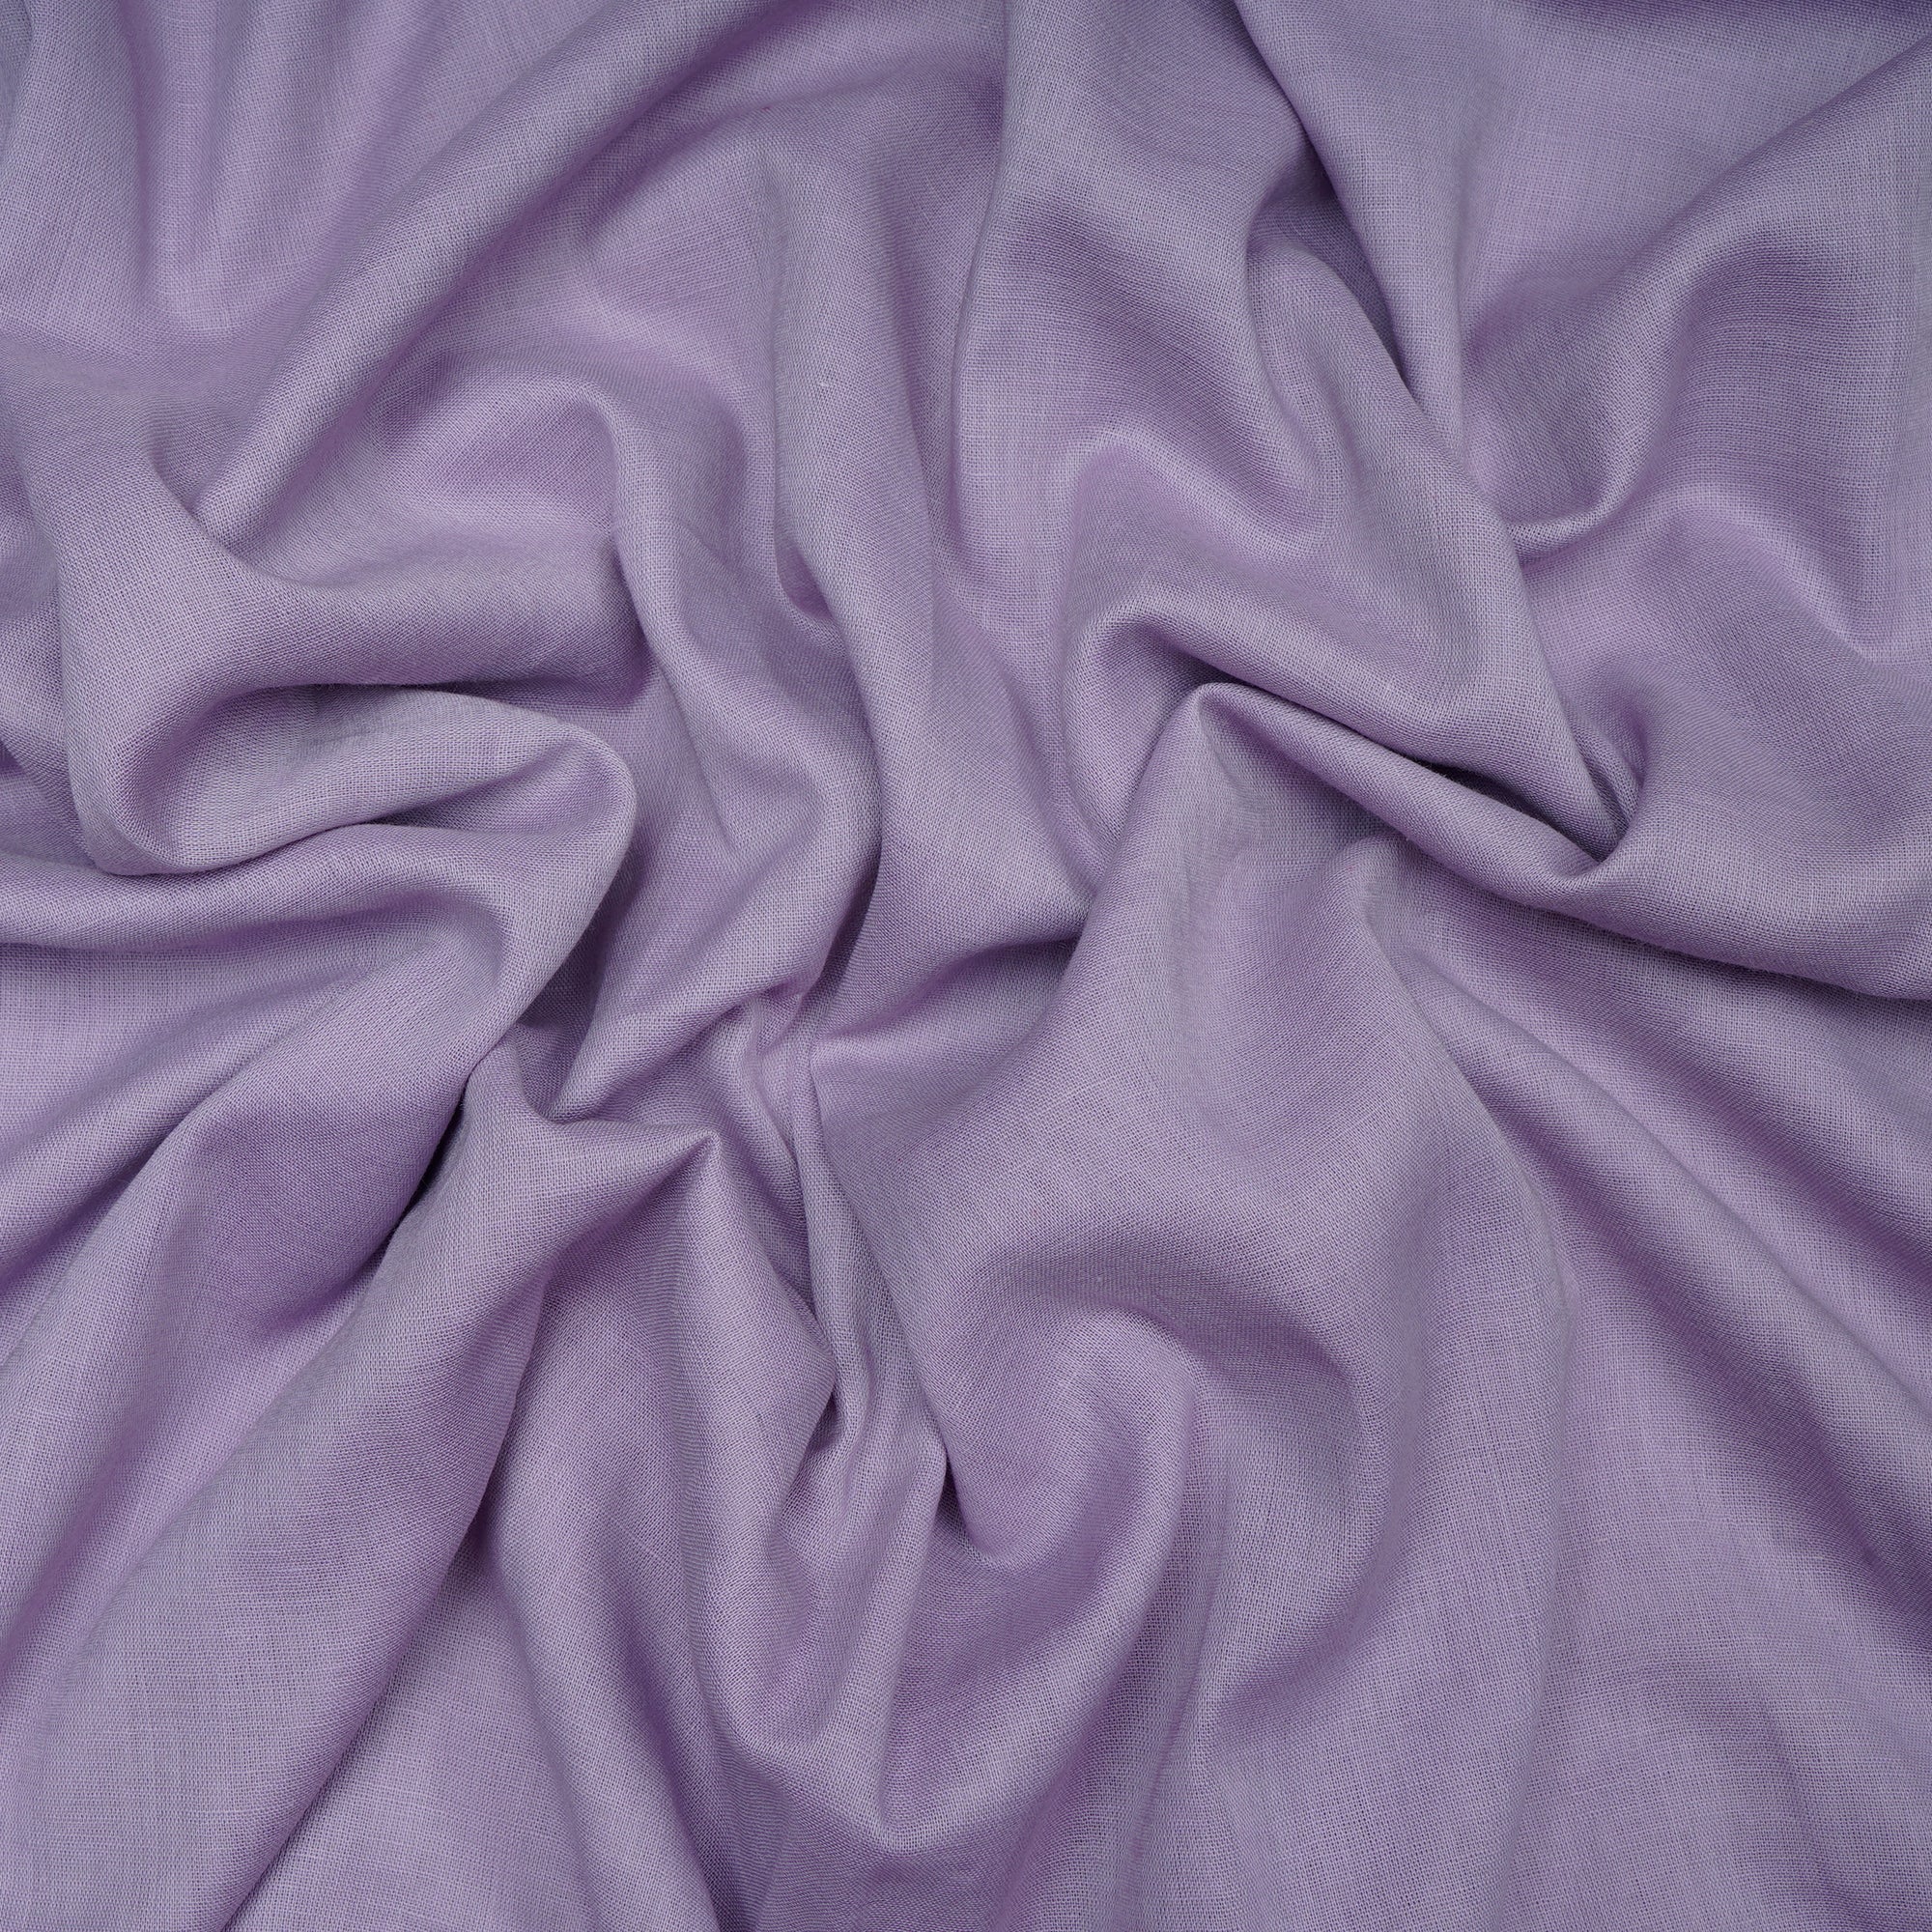 Lavender Piece Dyed Cotton Voile Fabric